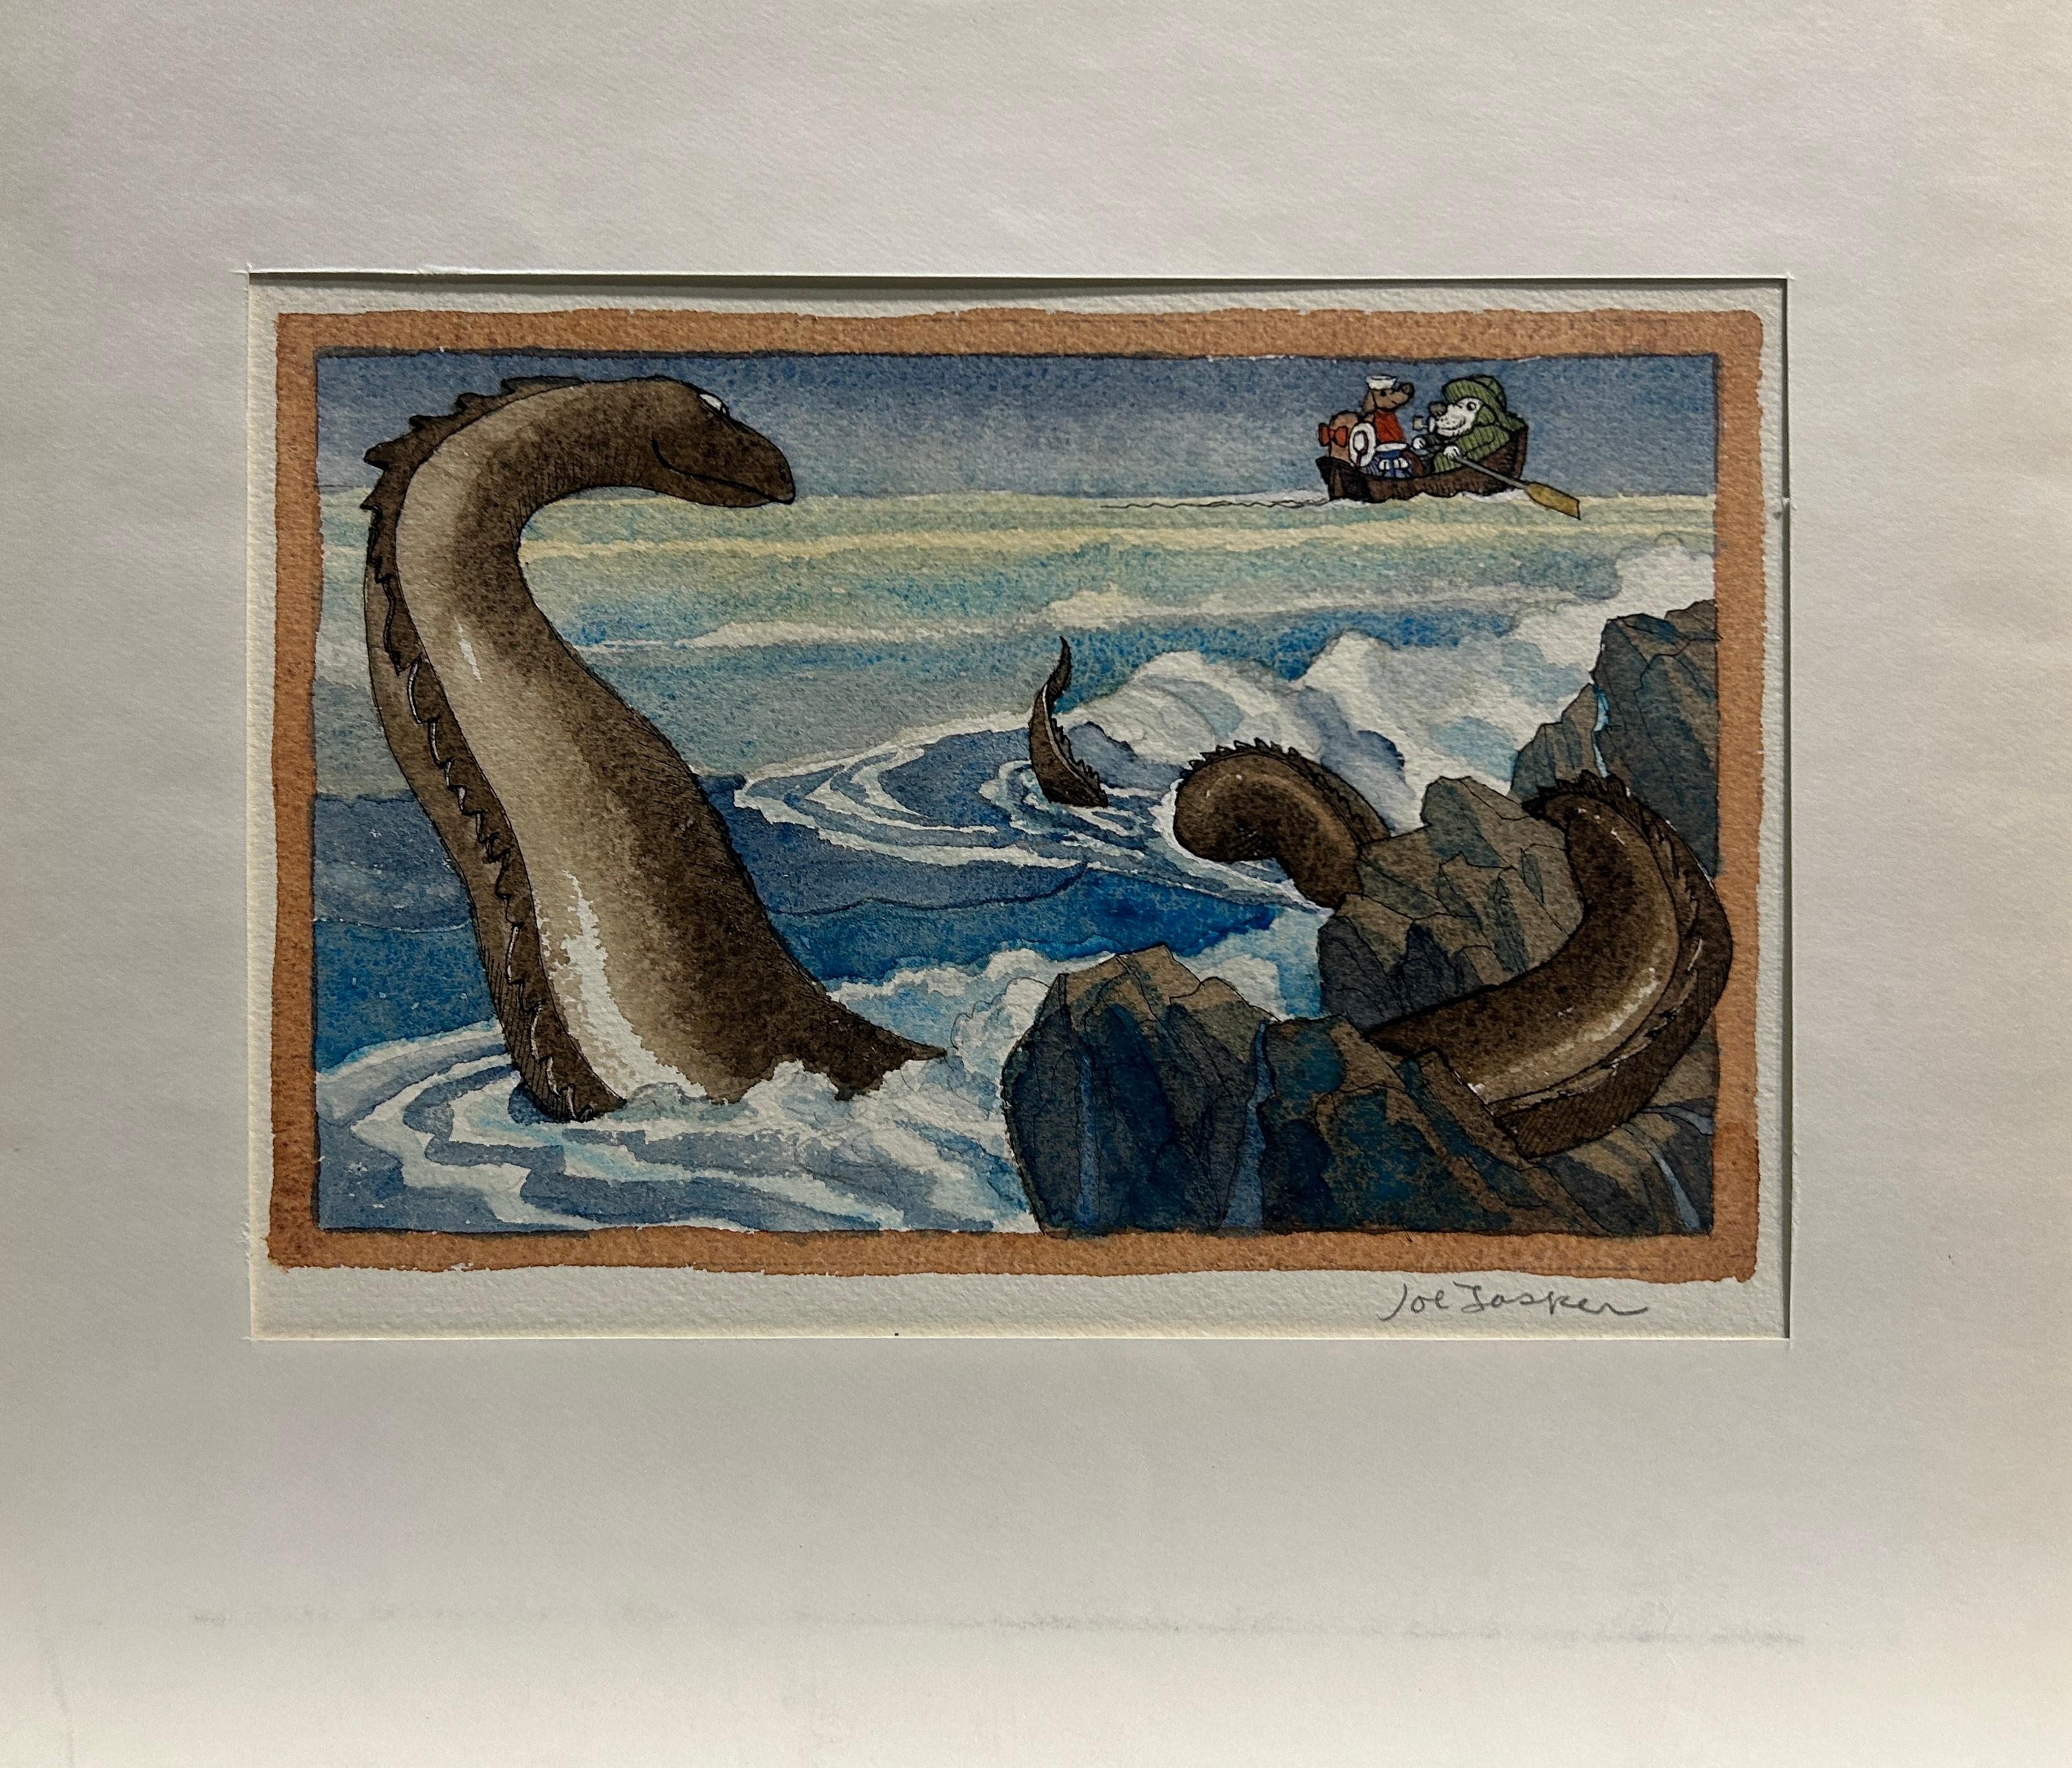 Joe Lasker Figurative Art - Sea Serpent